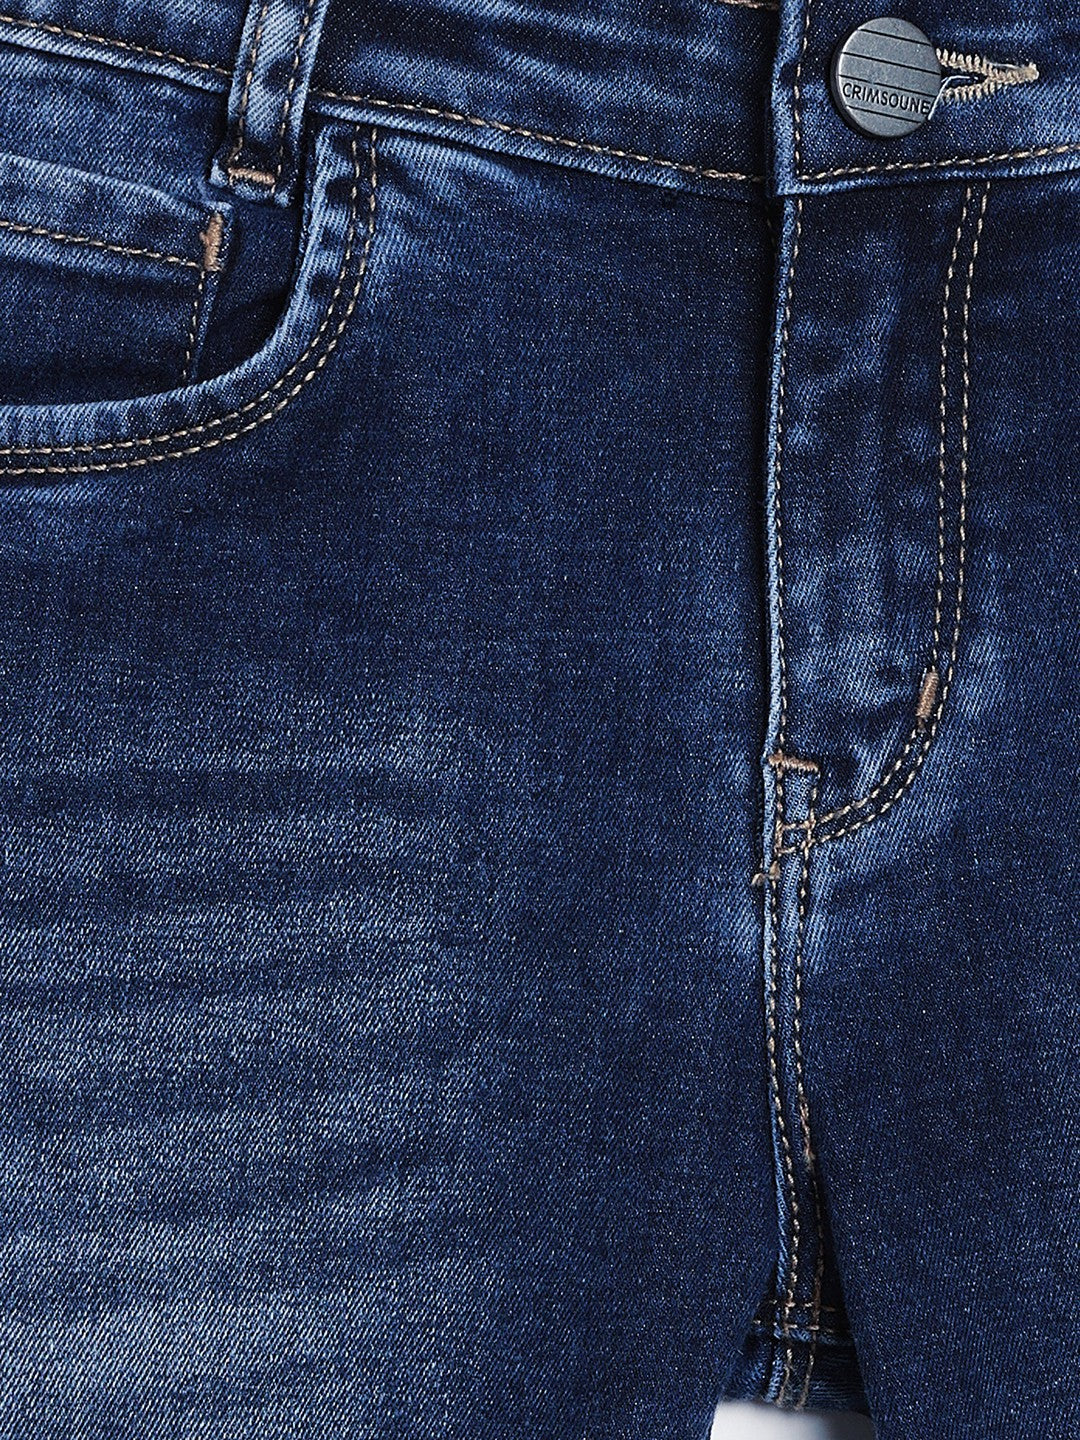 Blue jeans - Girls Jeans